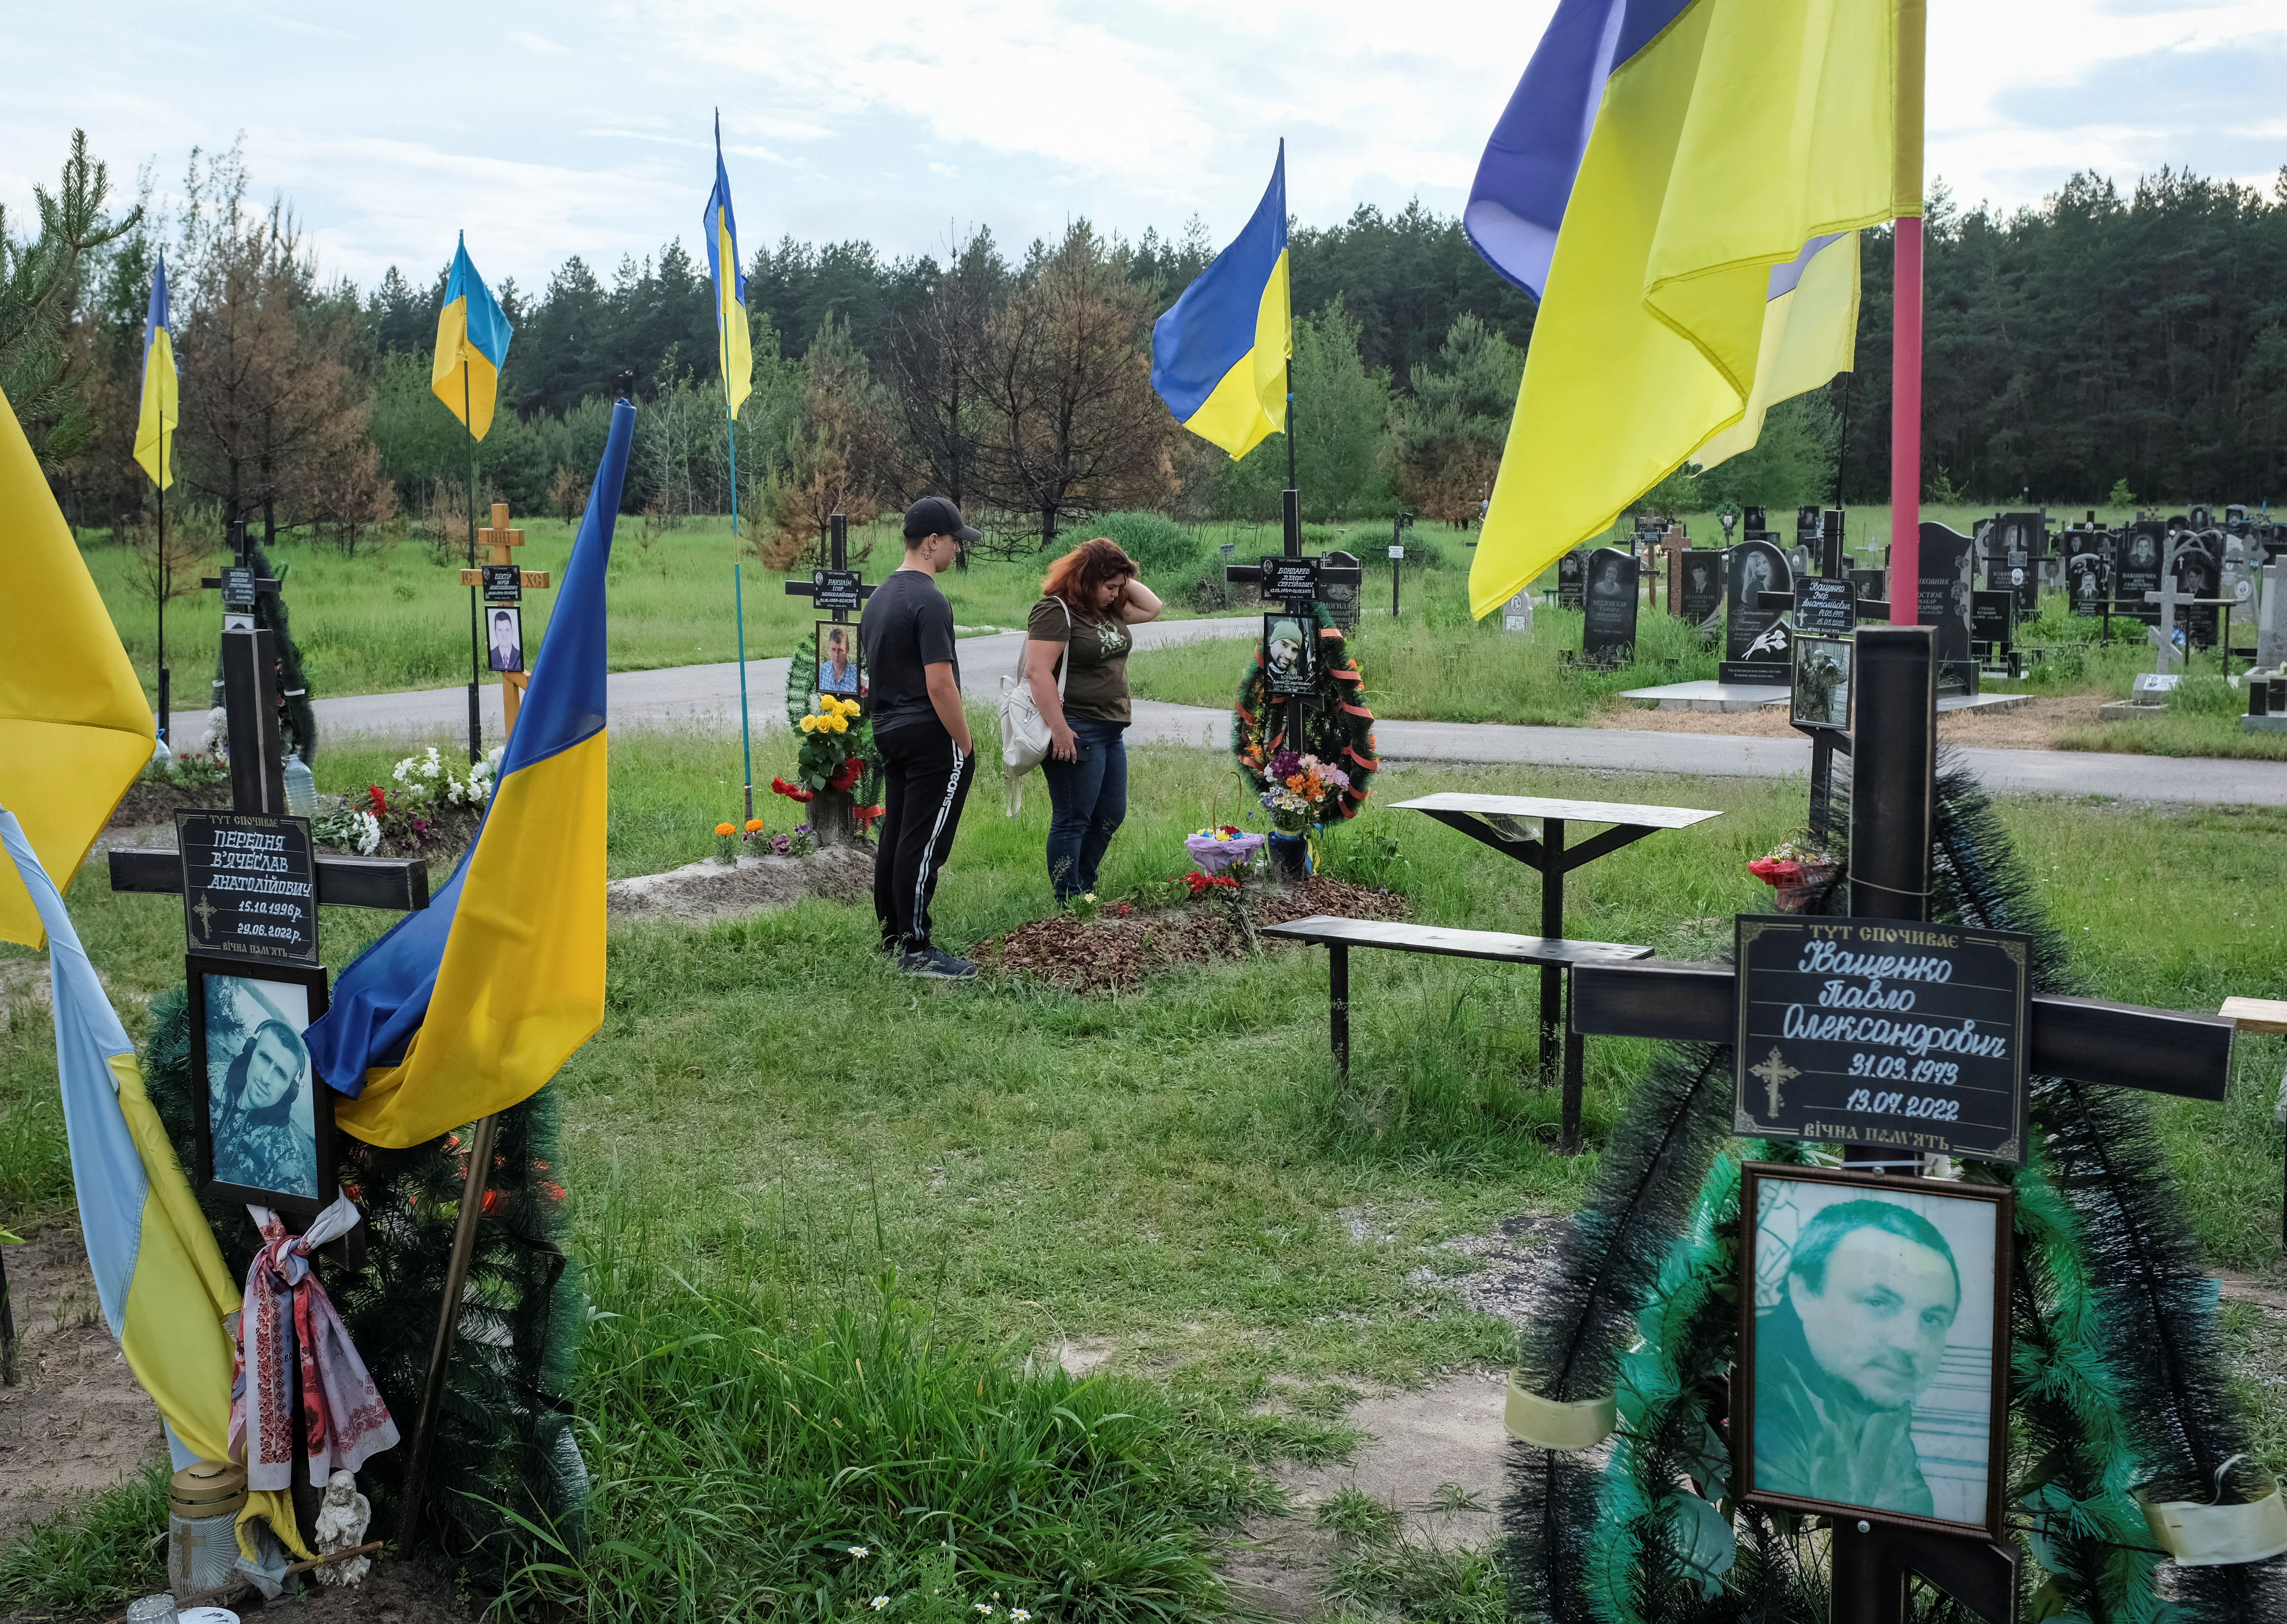 Tetiana Vatsenko-Bondareva reacts as she visits the grave of her husband Denys Bondarev at a cemetery in Poltava